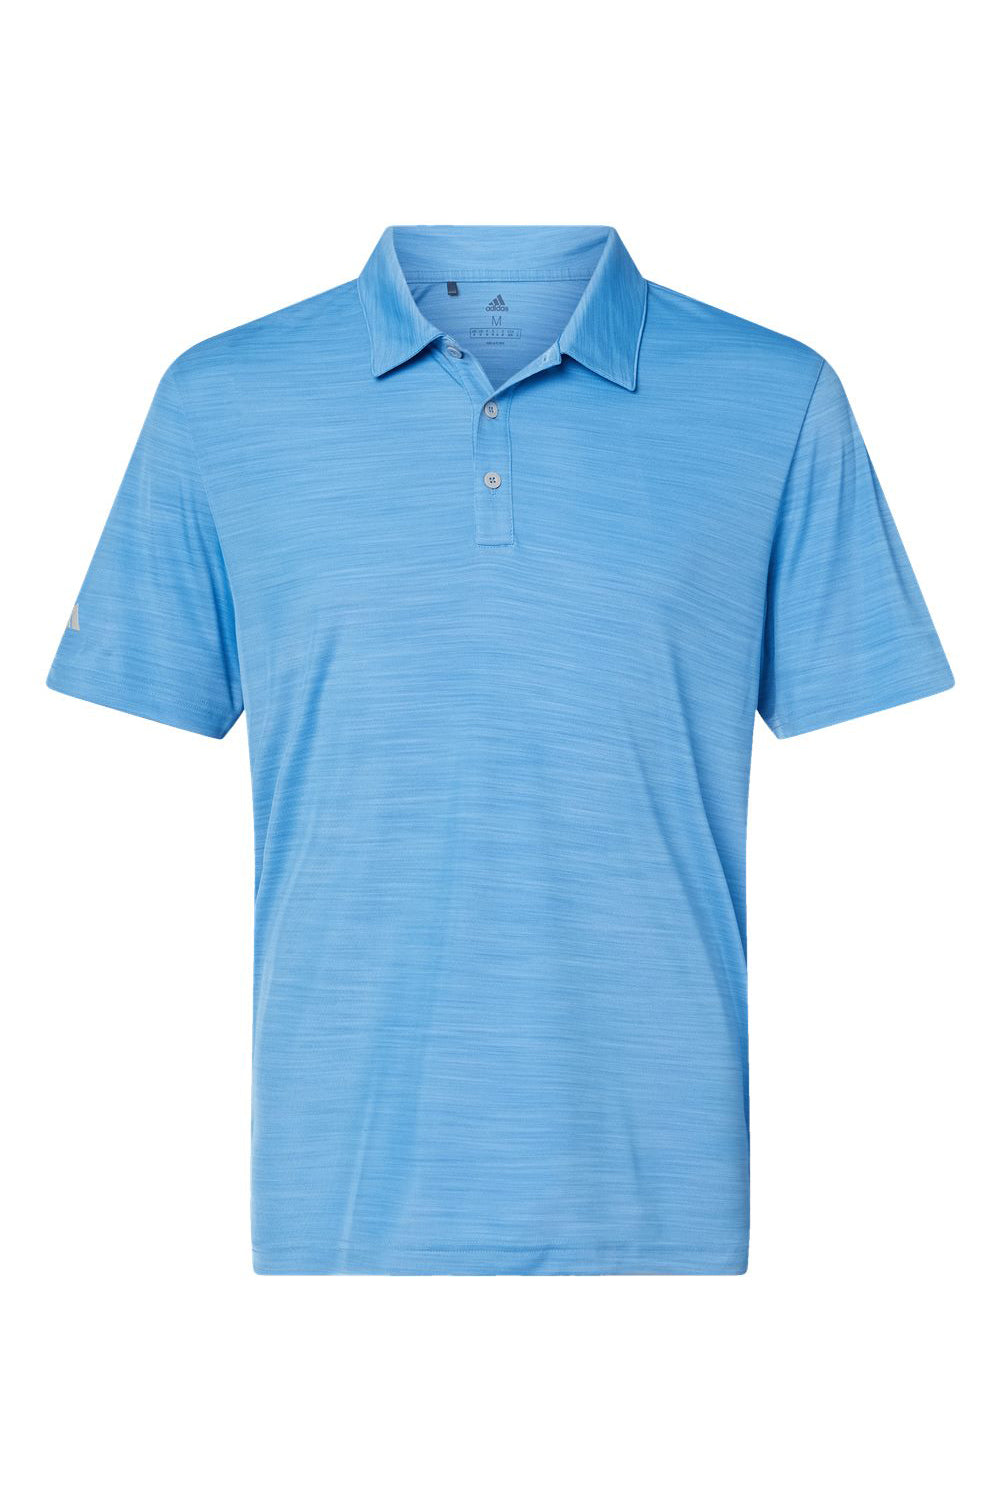 Adidas A402 Mens Melange Short Sleeve Polo Shirt Lucky Blue Melange Flat Front